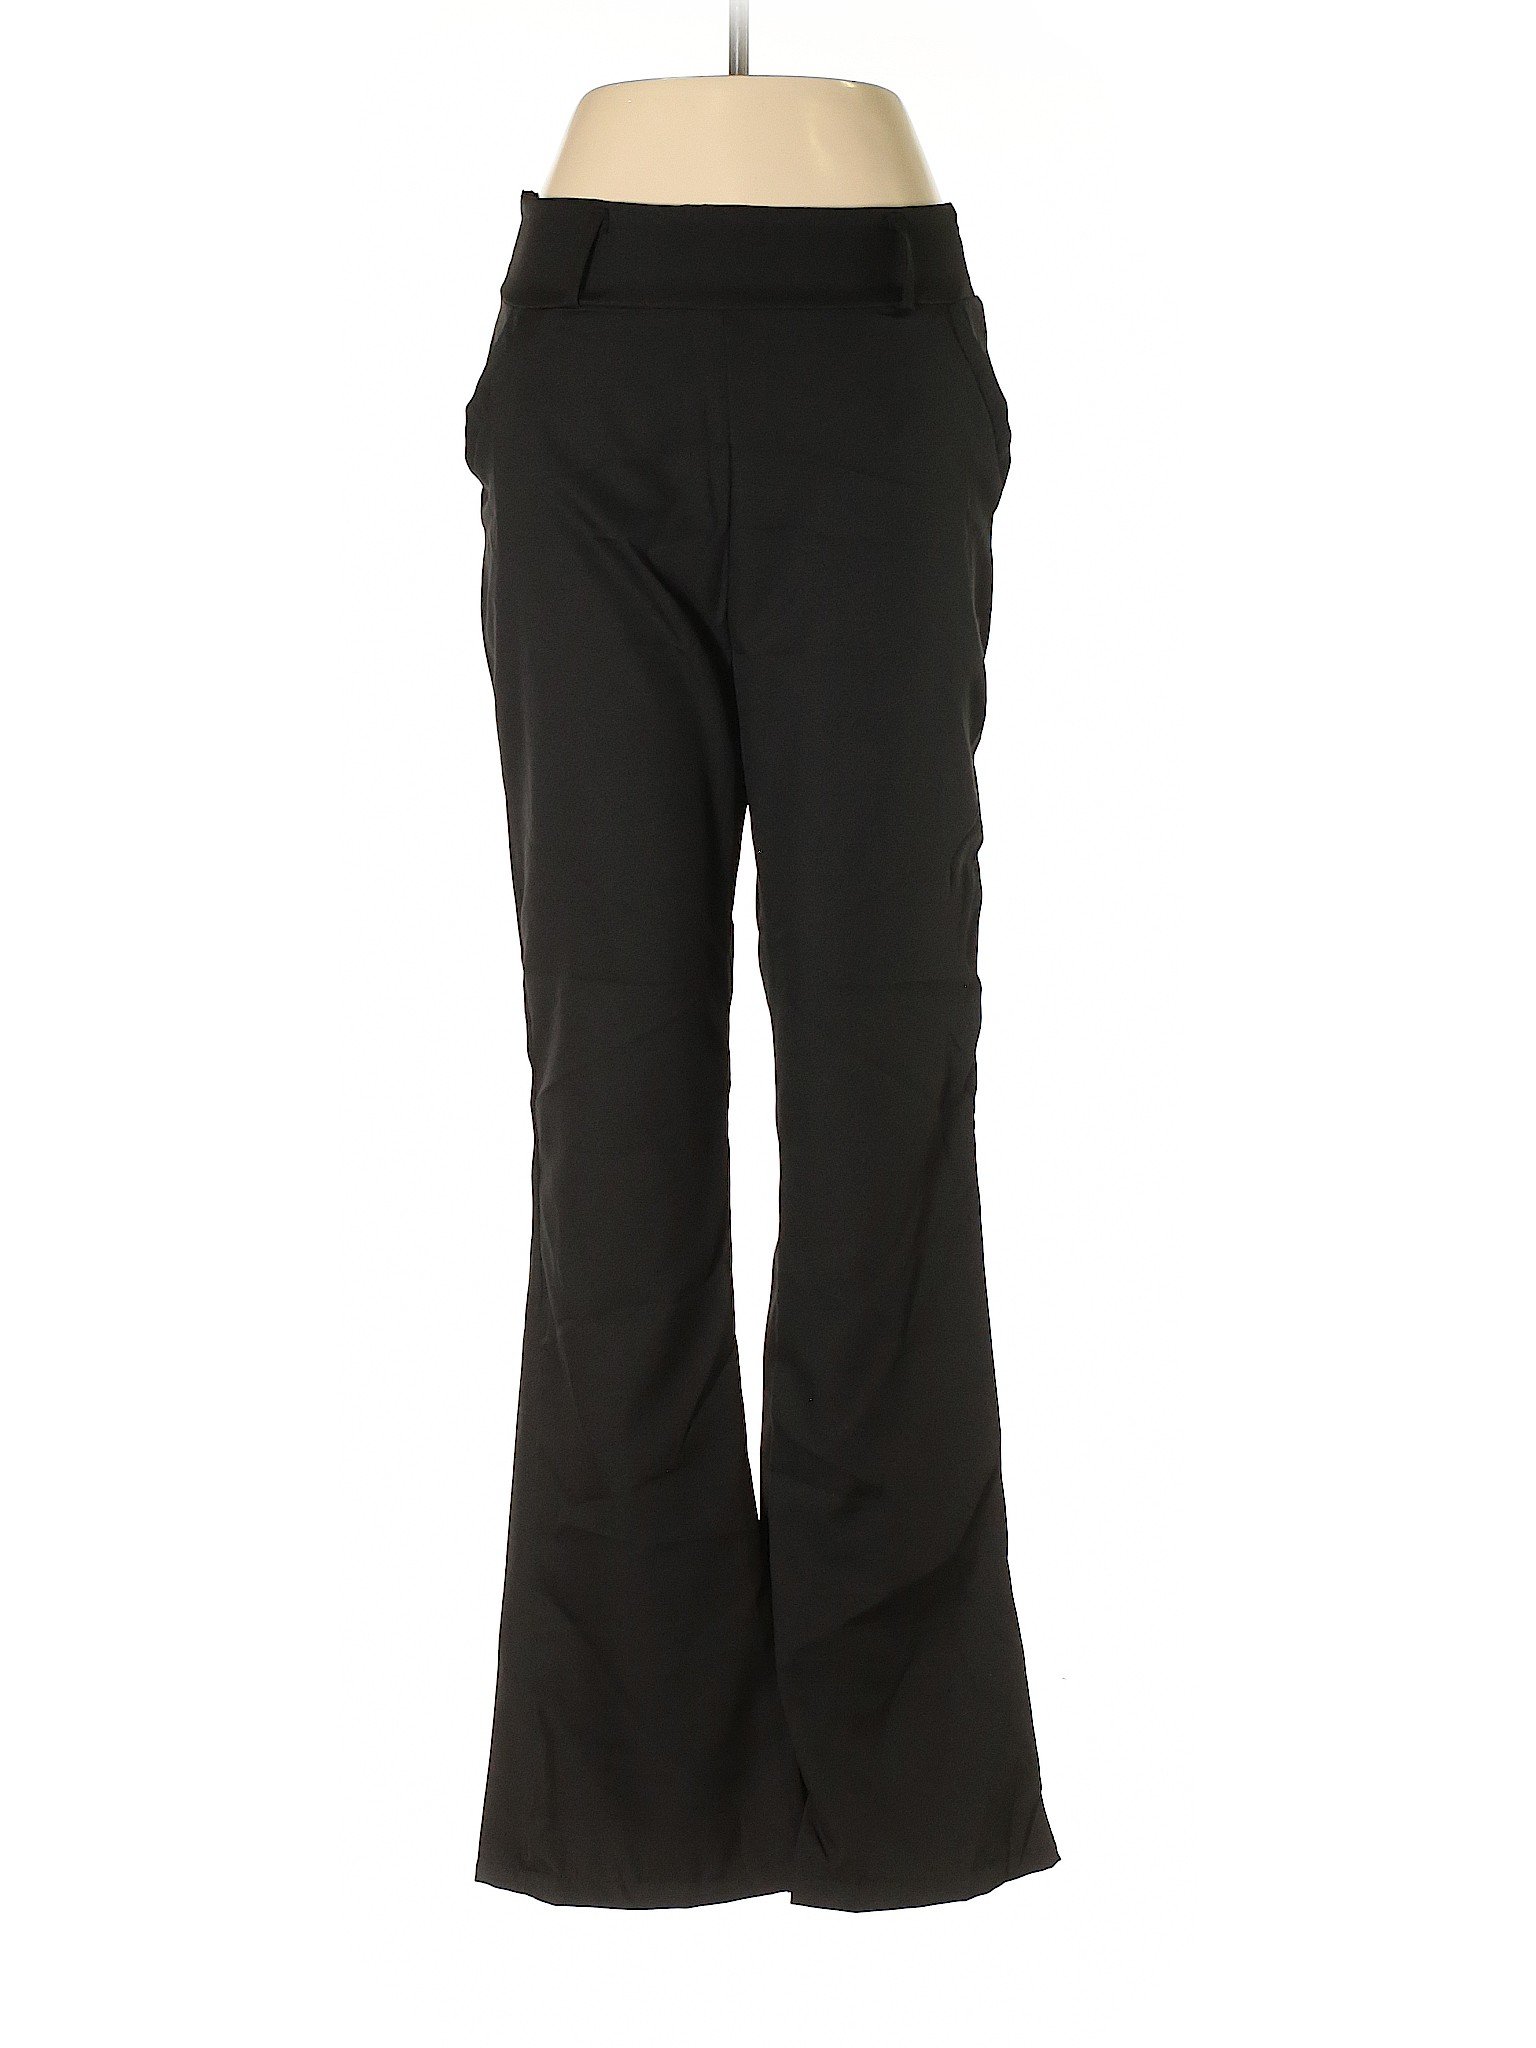 Assorted Brands Women Black Dress Pants M | eBay